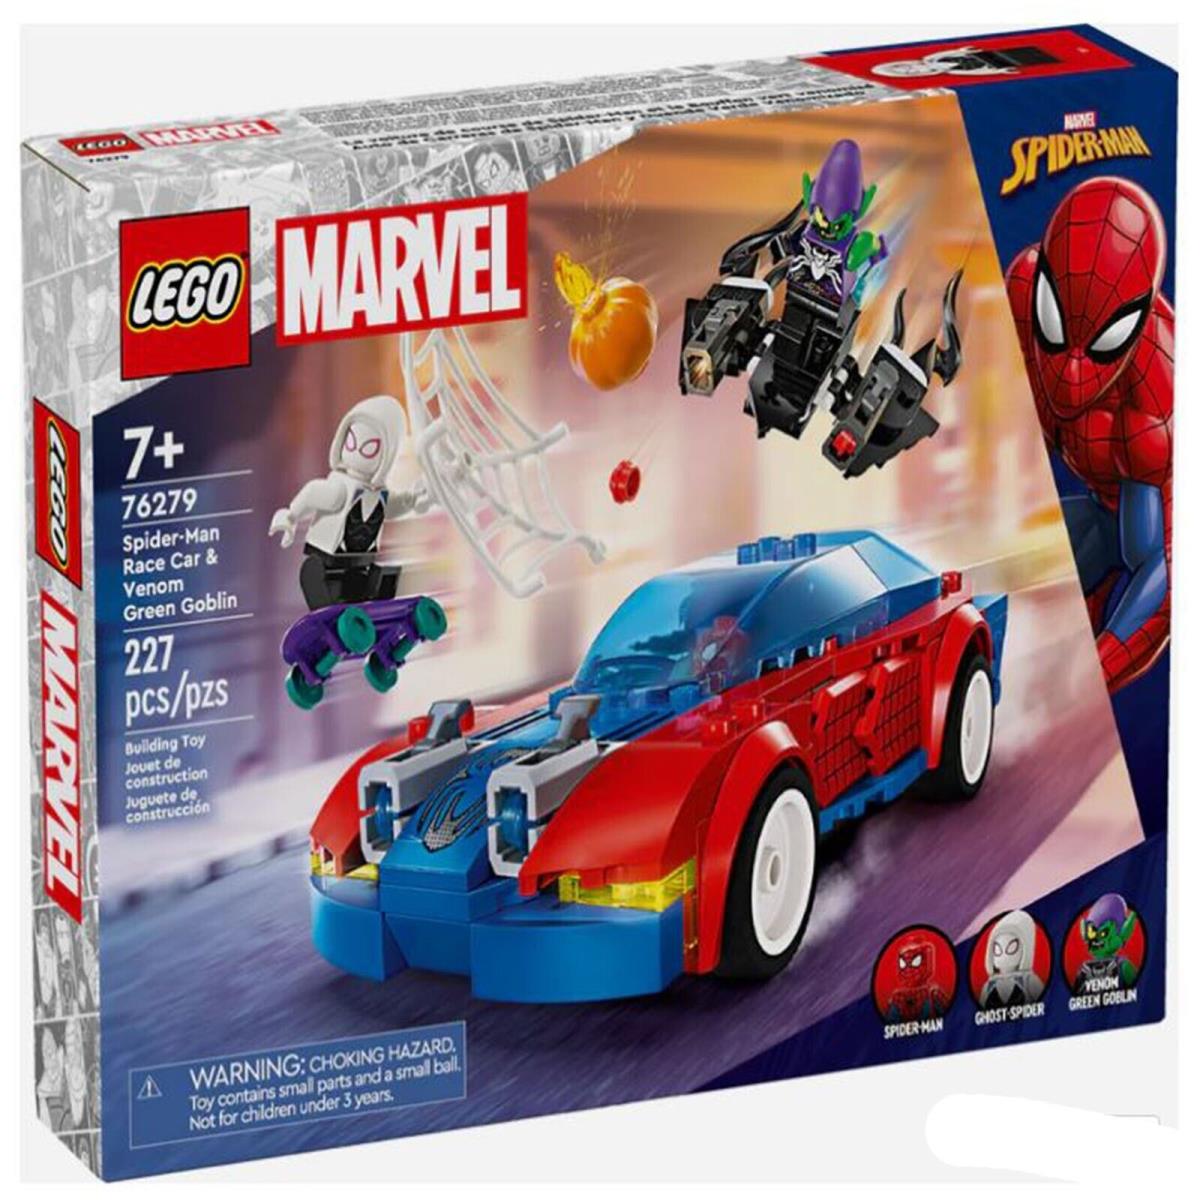 Lego Marvel Spider-man Race Car and Venom Green Goblin Building Set 76279